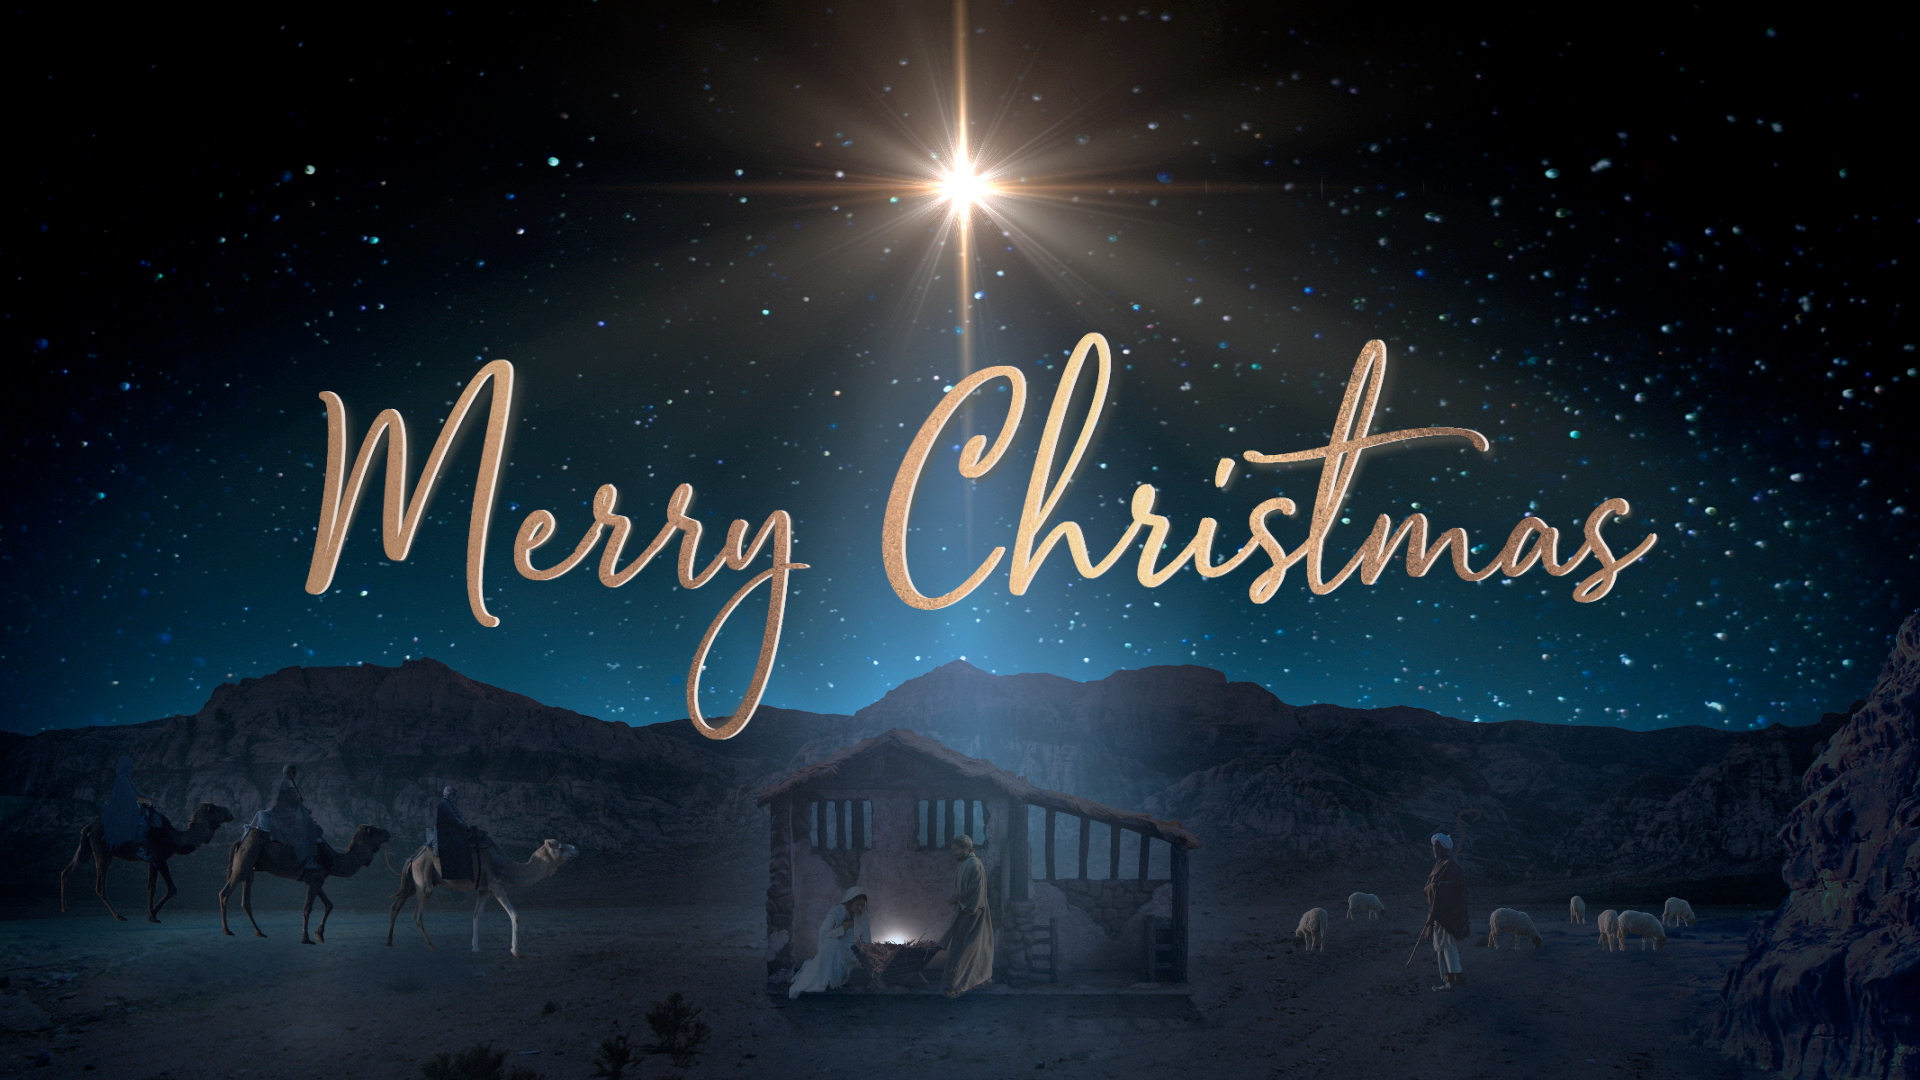 Senator Kiffmeyer: Wishing you and your family a Merry Christmas!